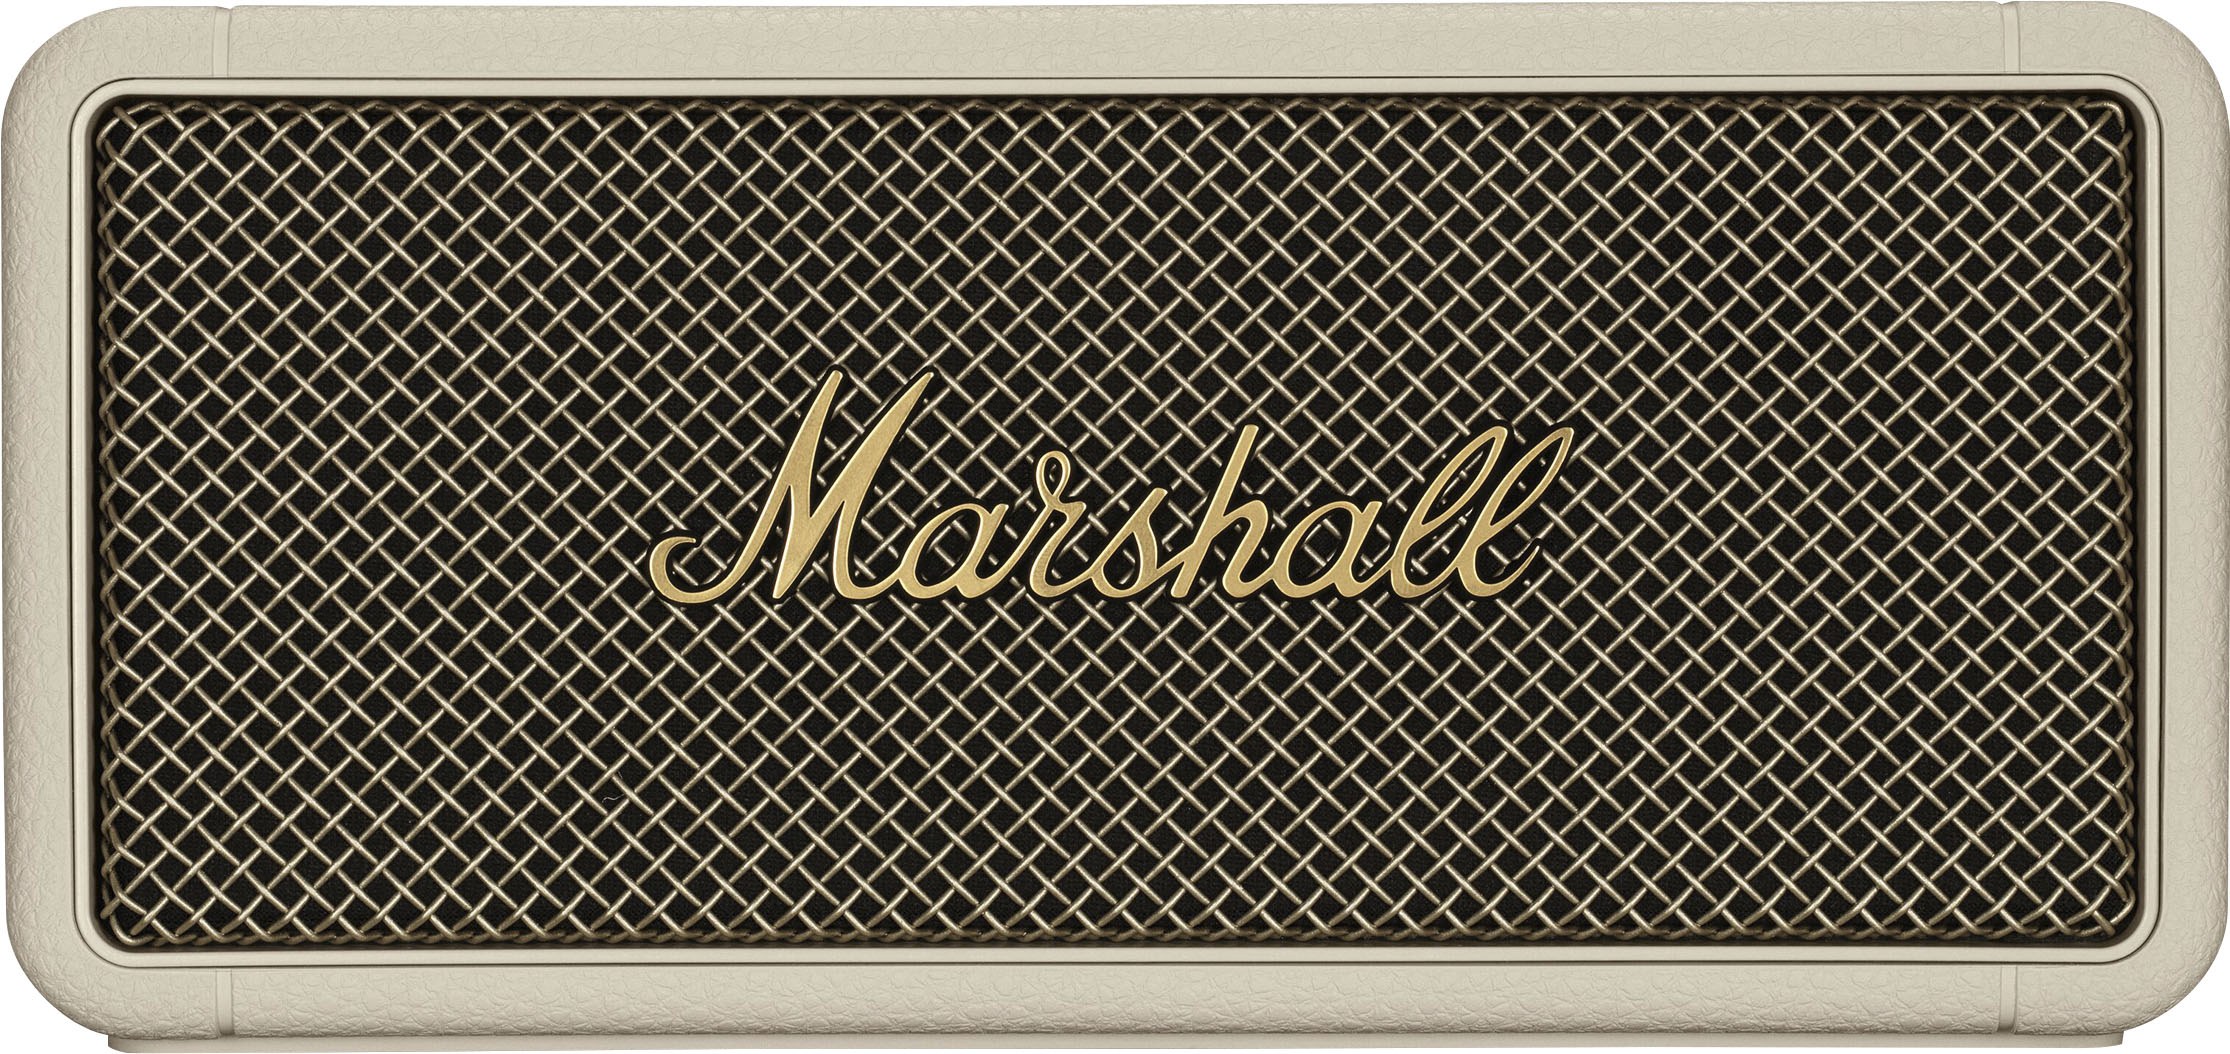 Marshall Emberton II Buy 1006237 - Bluetooth Best Speaker Cream